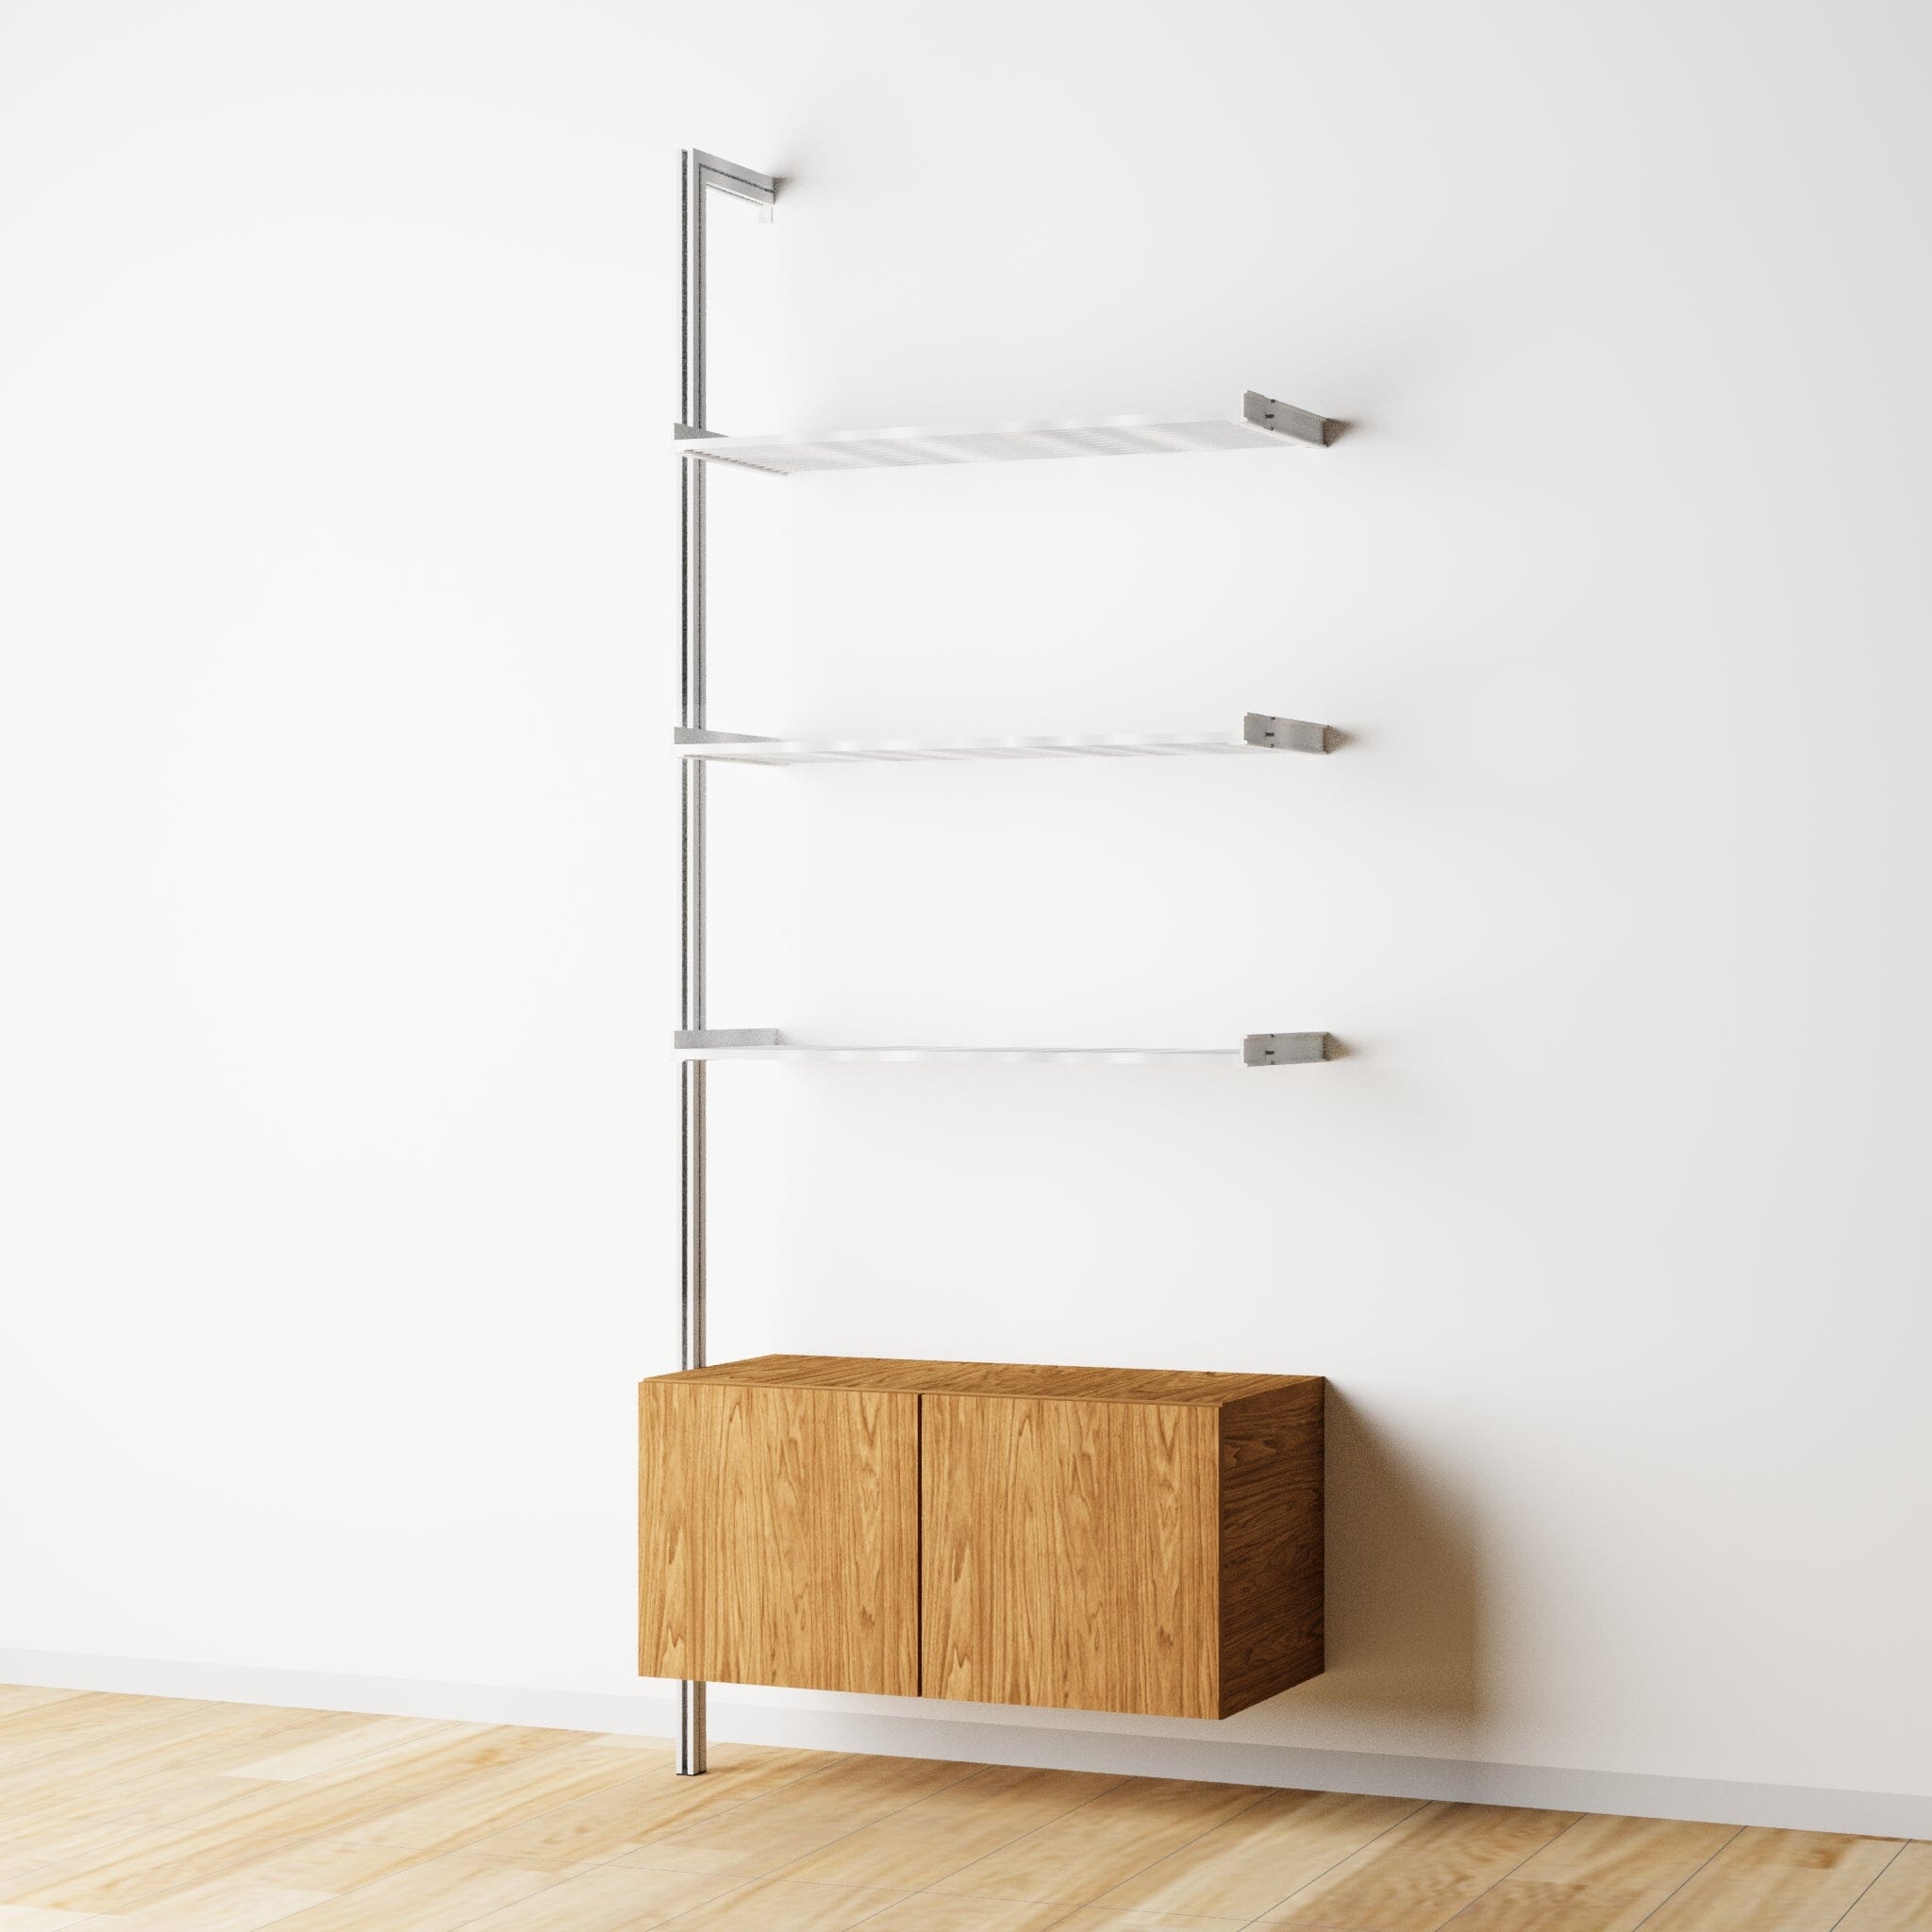 Modular Shelving Units - Aluminum Shelves + Wood Cabinets